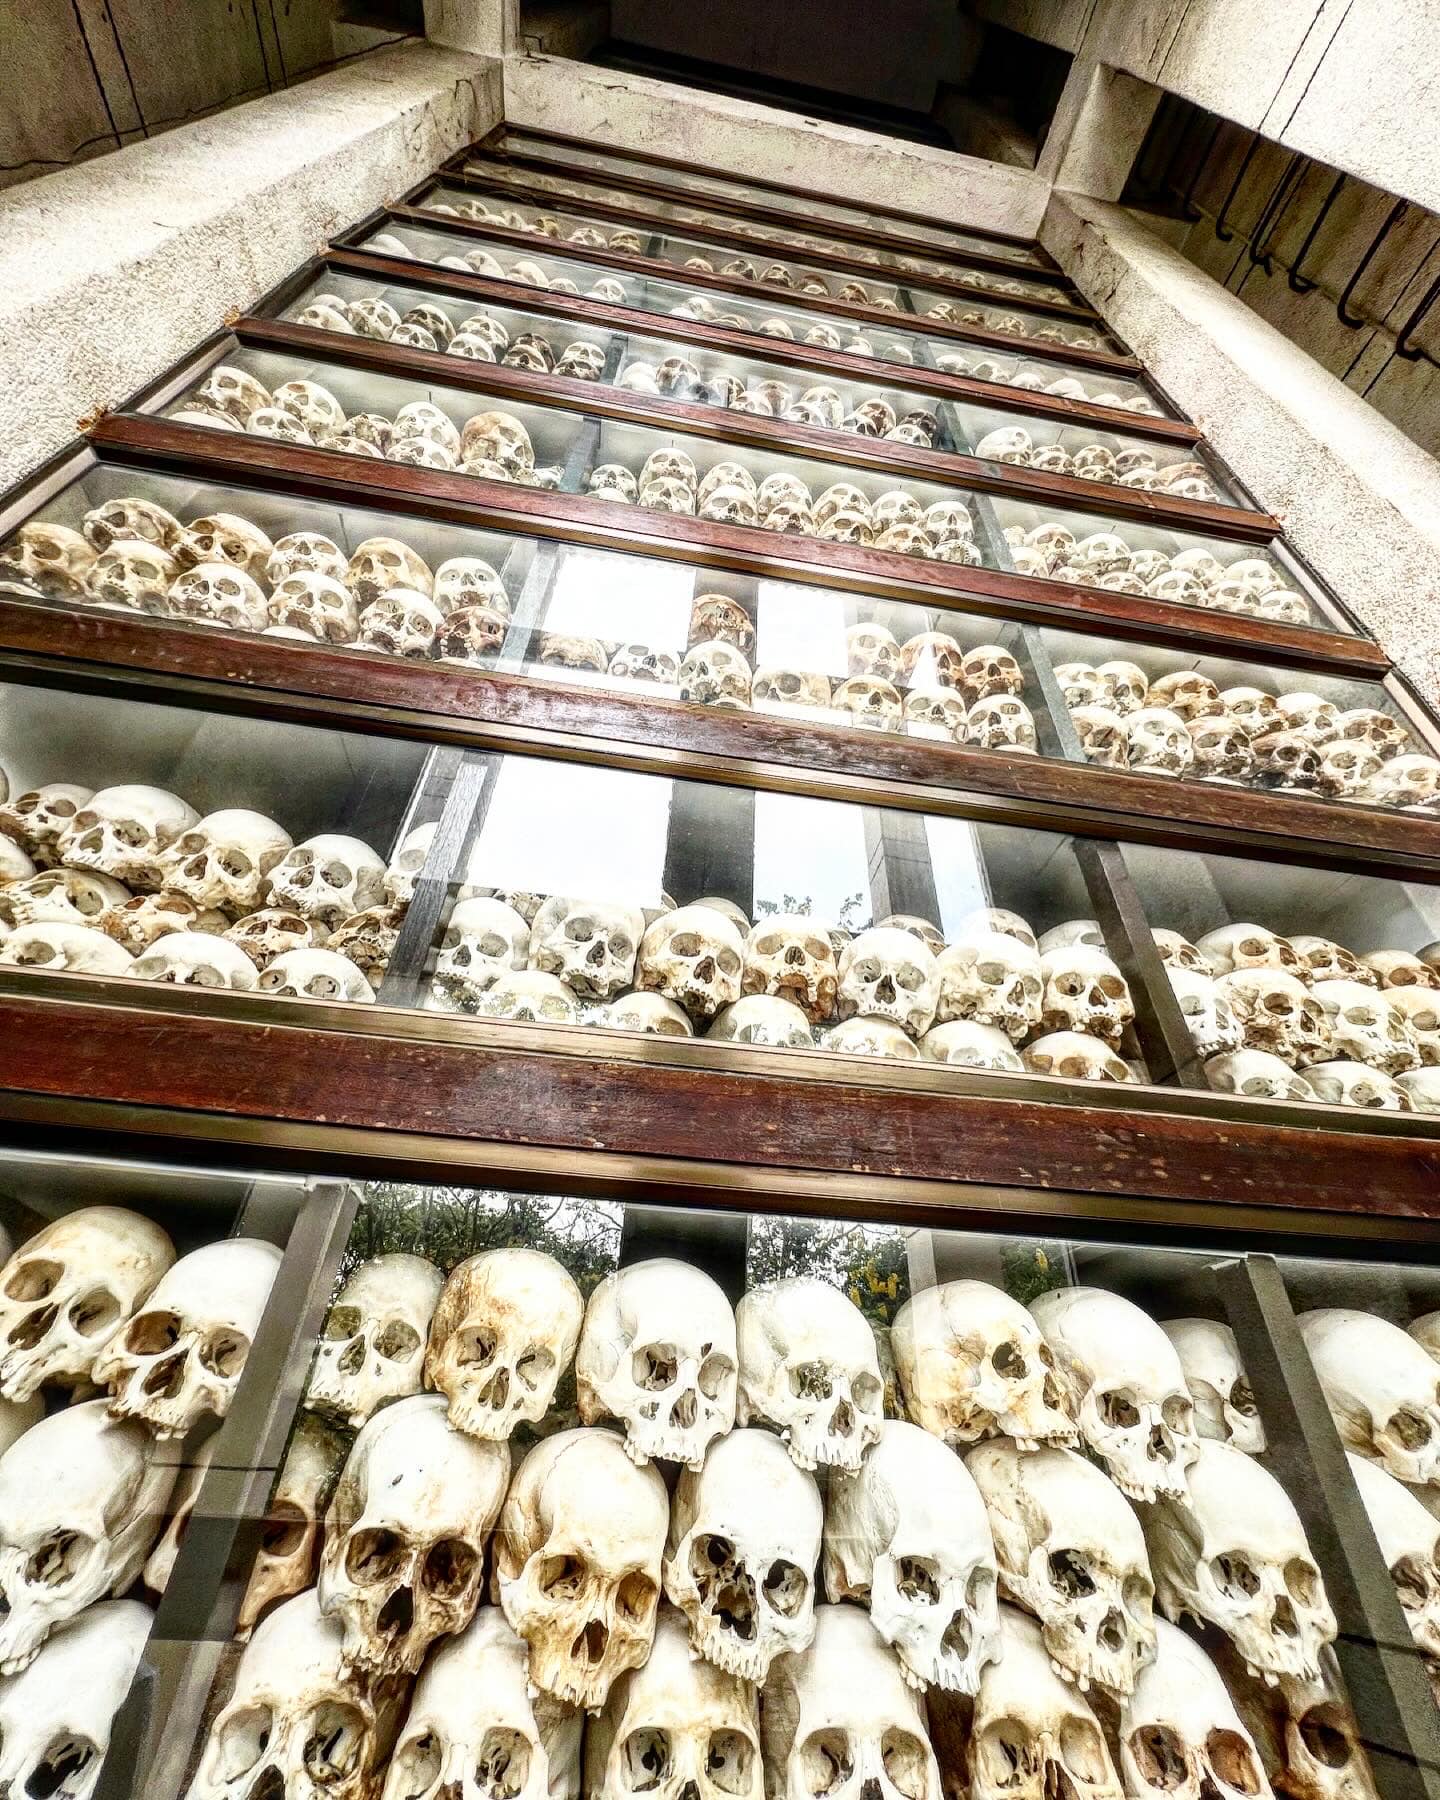 The last Killing Fields of Cambodia